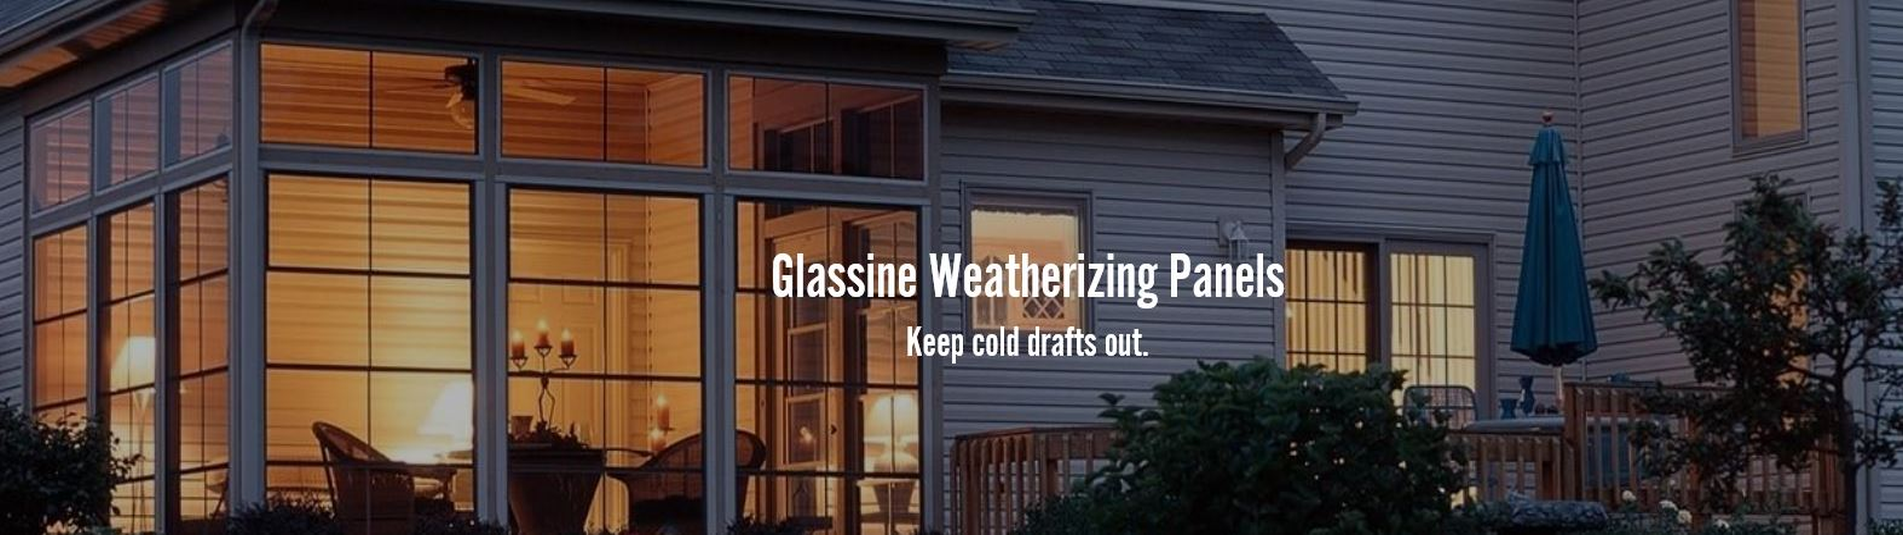 All weather patio glassine